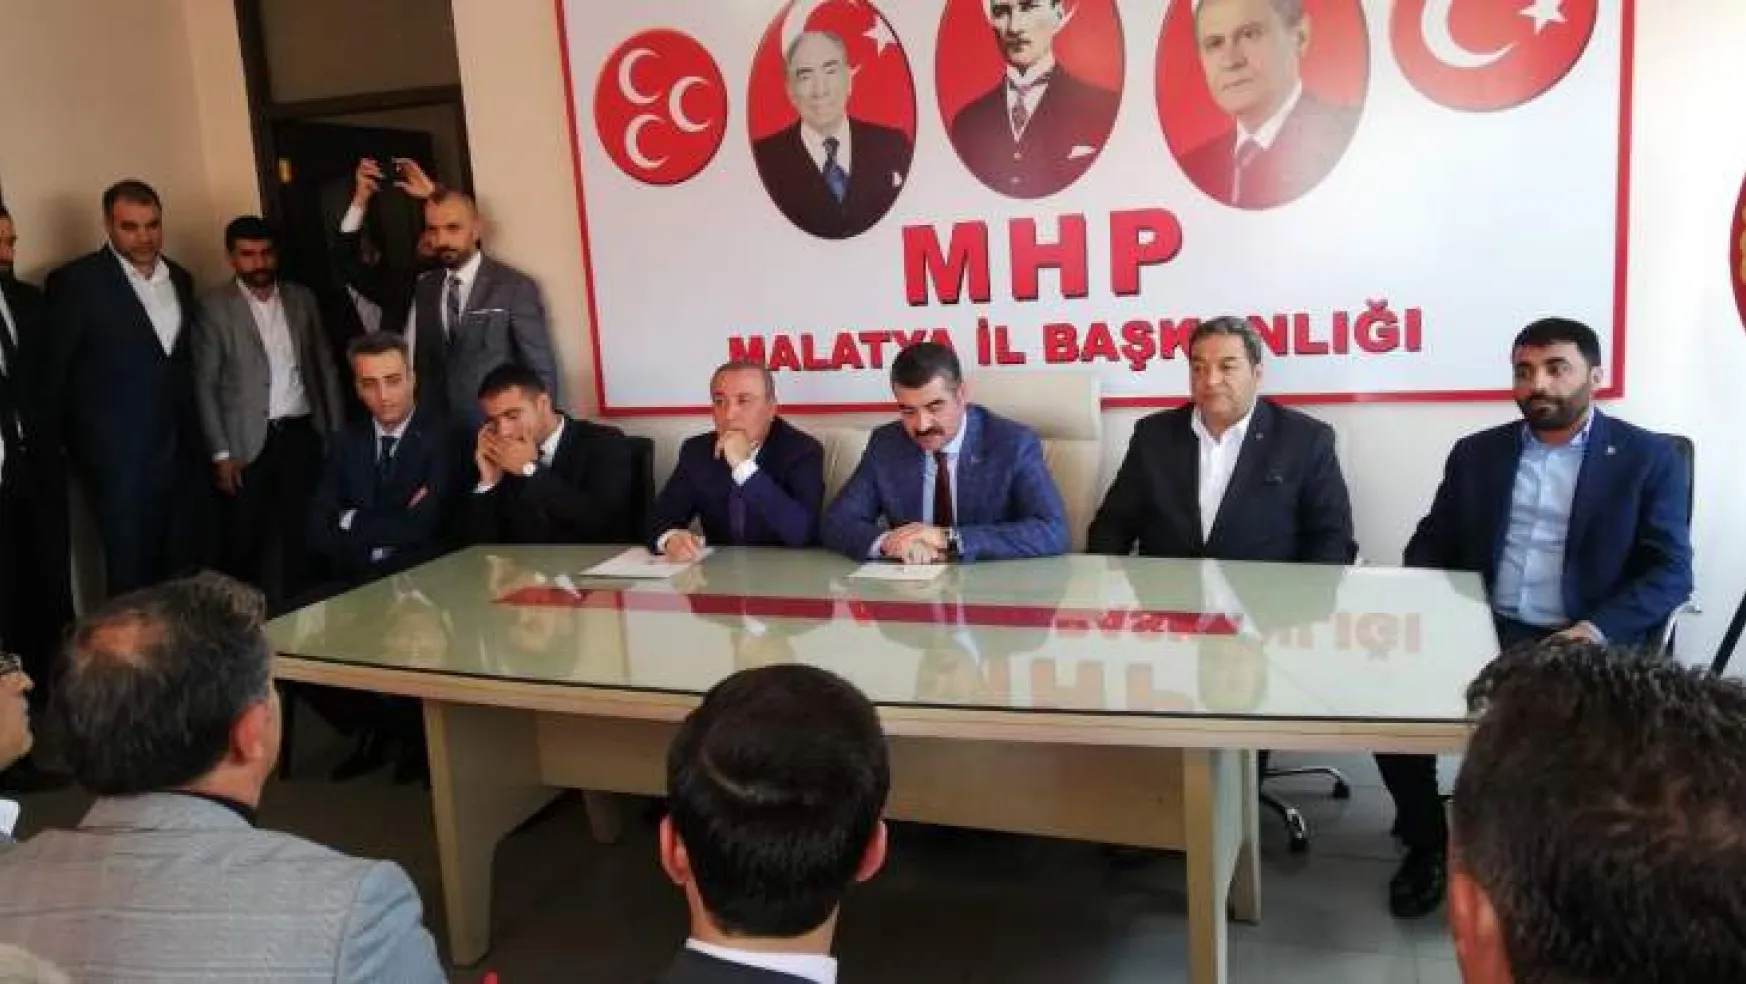 MHP Malatya Milletvekili Ekici'nin Bayram Mesajı